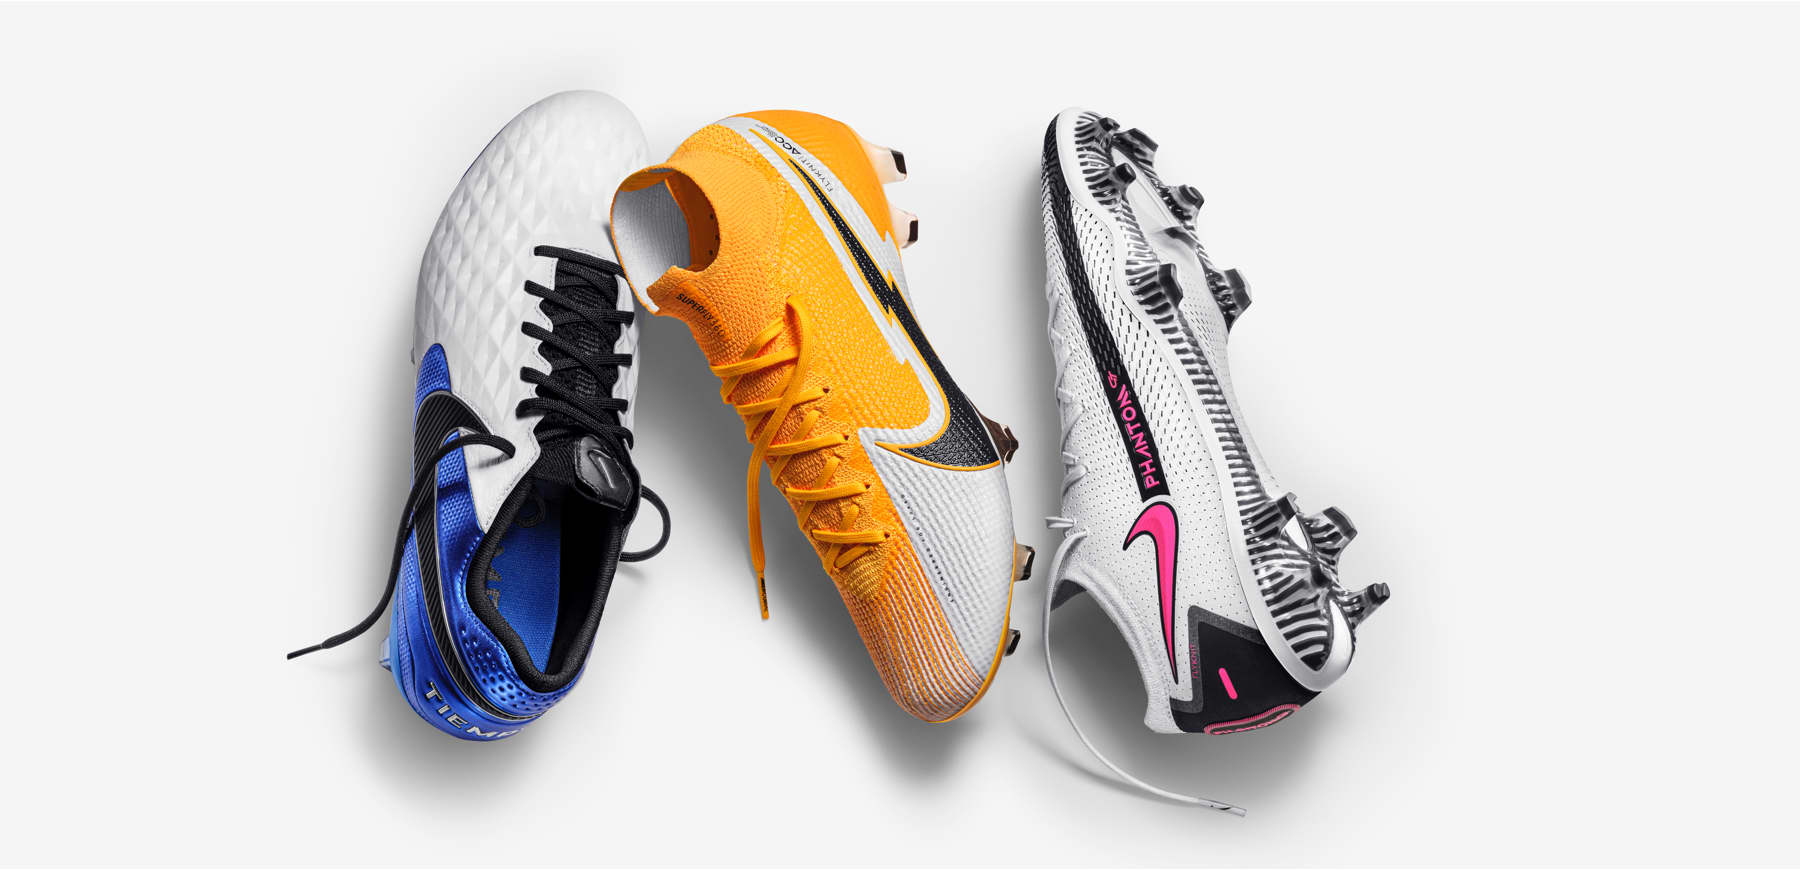 Factor malo Legado Calígrafo Guía de zapatillas de fútbol. Nike ES